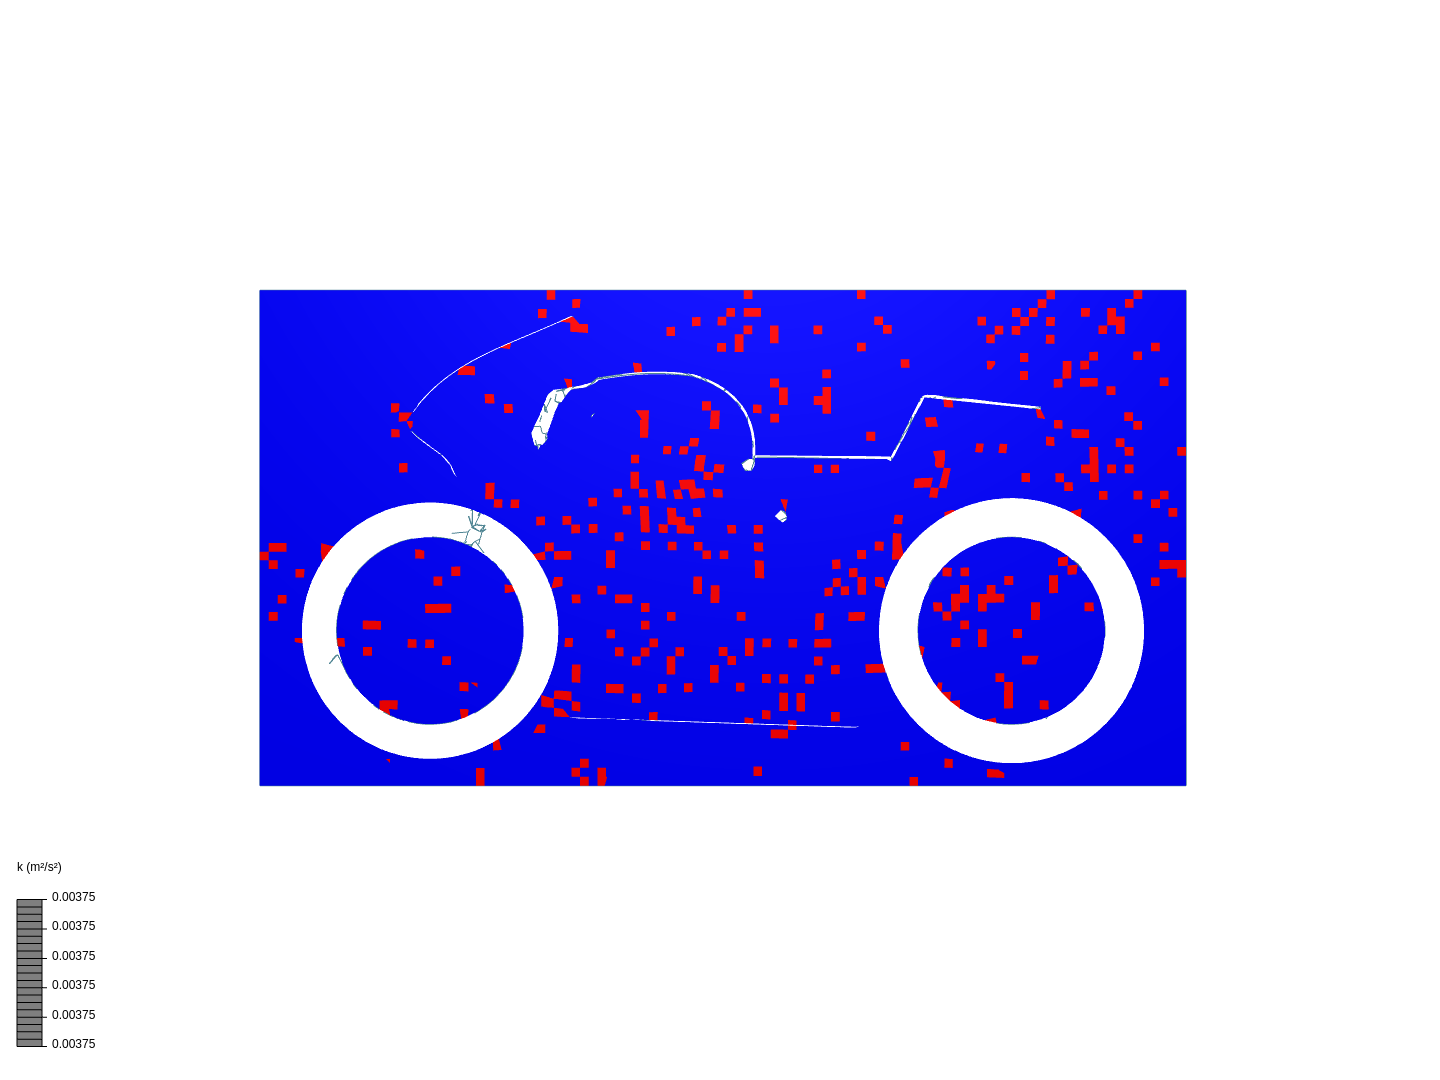 Bike_simulation image